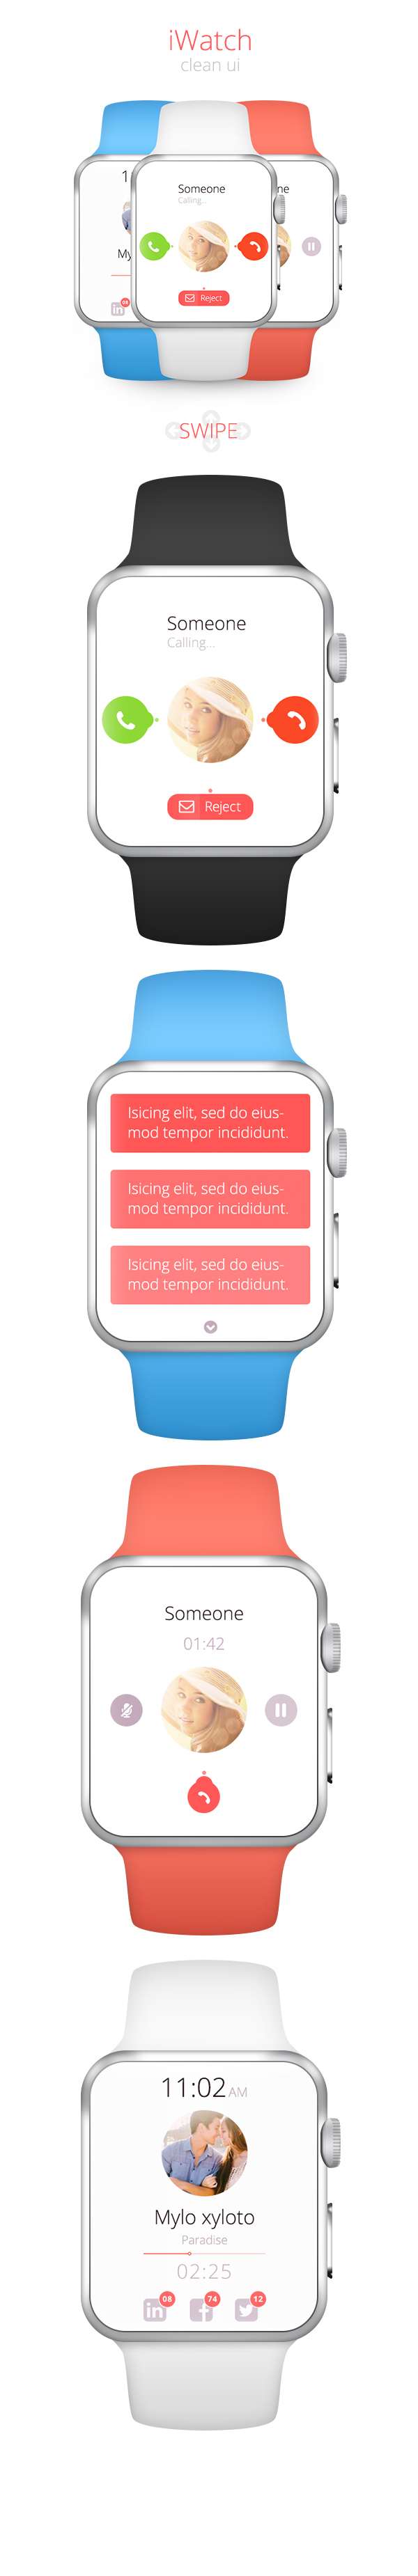 iwatch UI clean concept apple watch